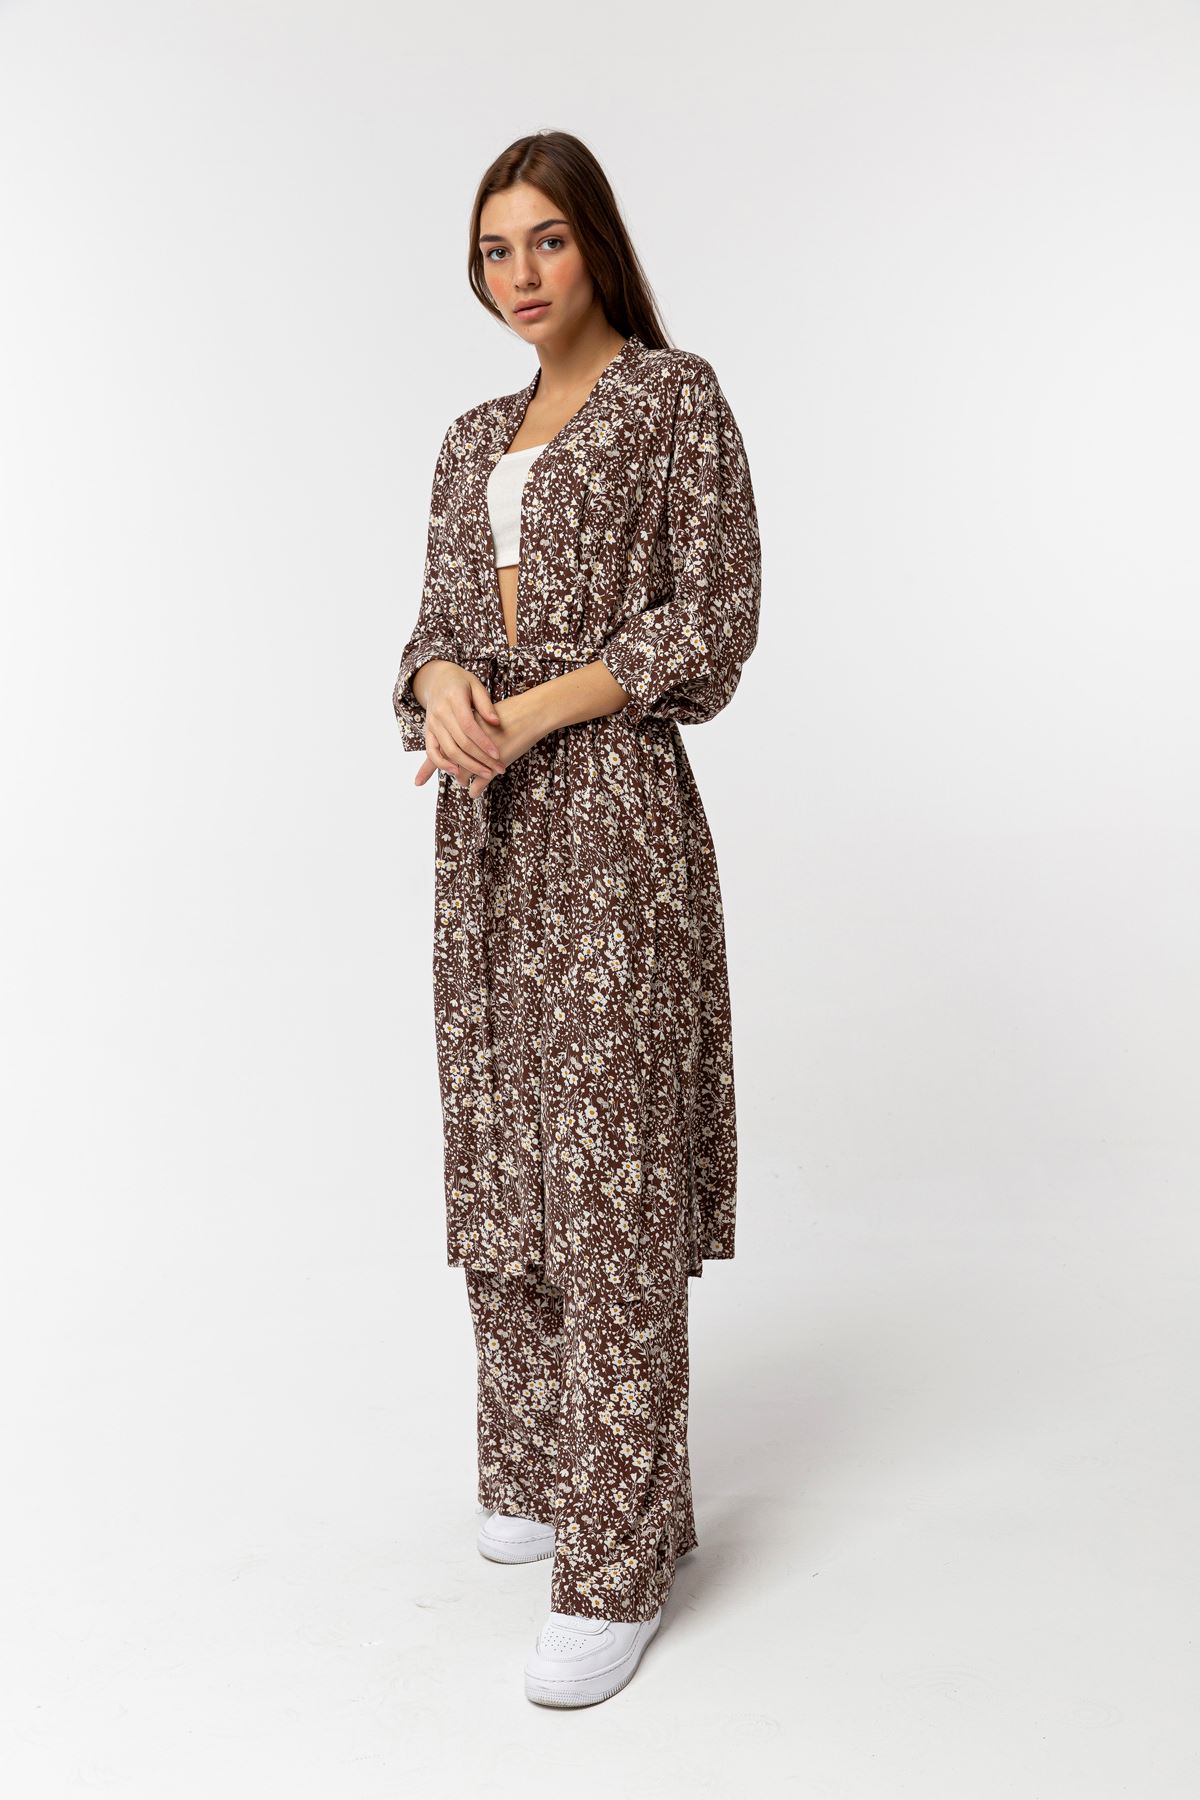 Viscose Fabric Long Sleeve Without Collar Long Oversize Crispy Floral Print Women Kimono - Brown